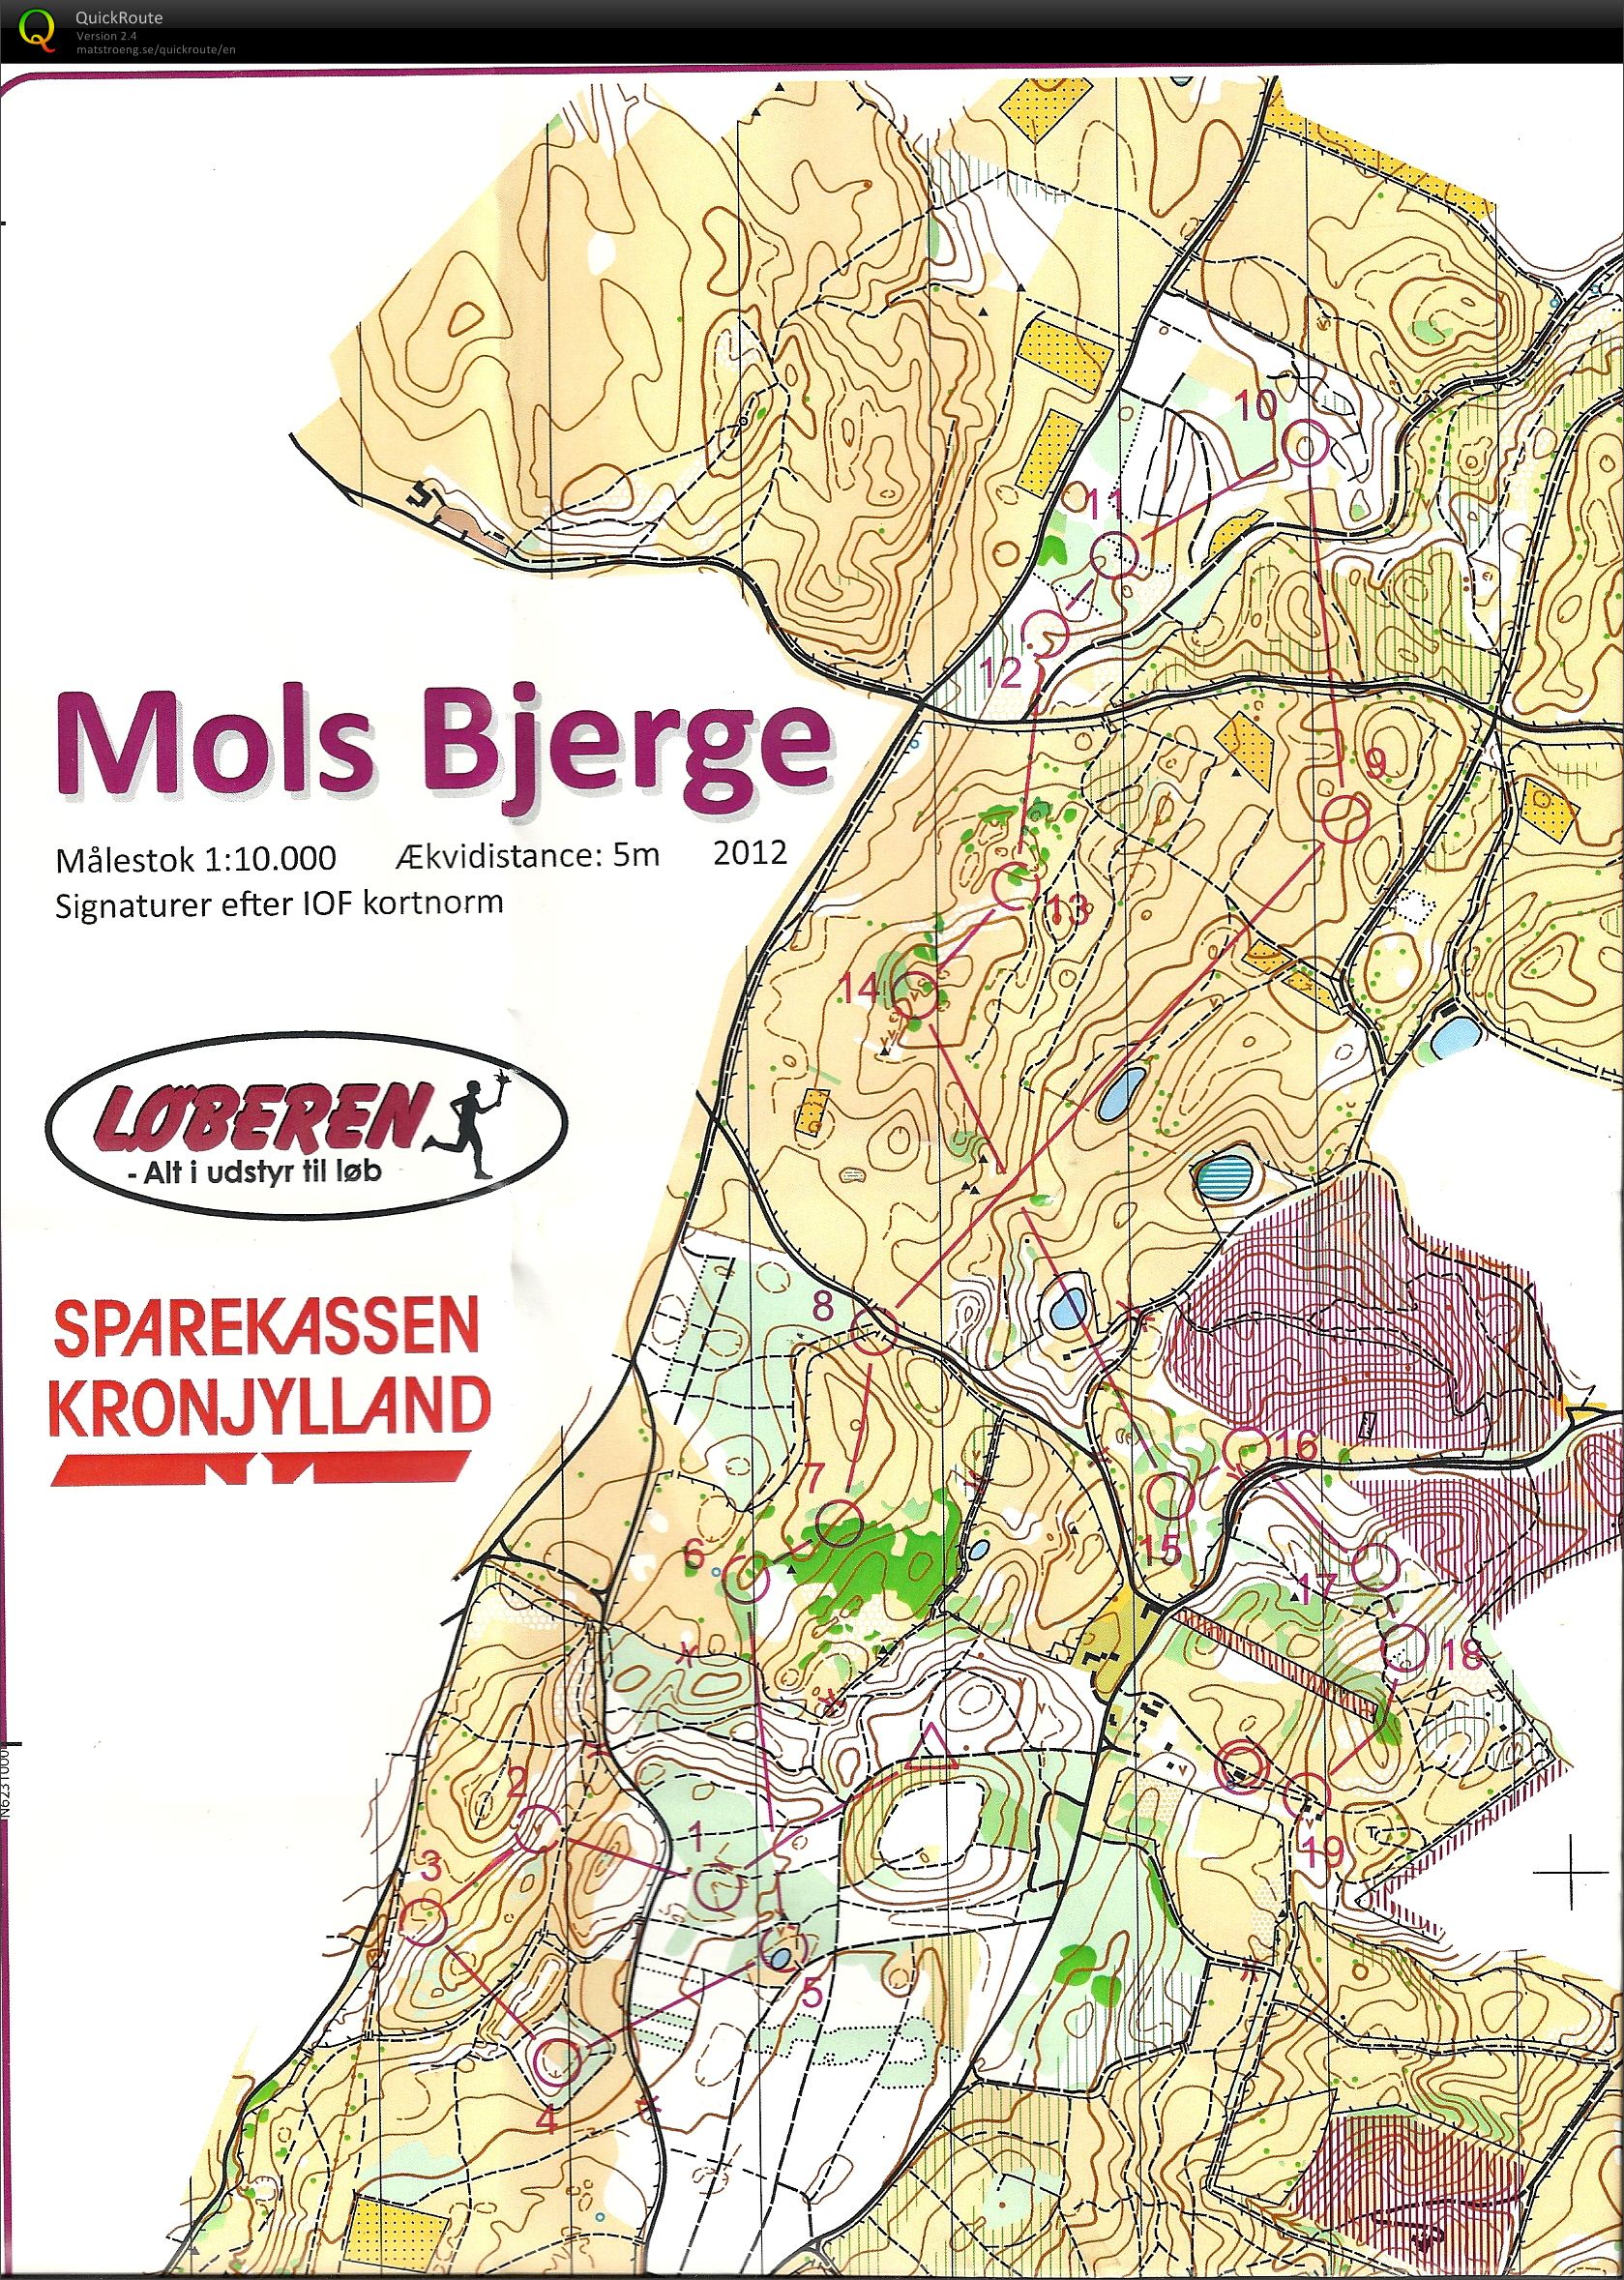 Mols Bjerge, JFM Lang, D45, LeneSN (19/08/2012)